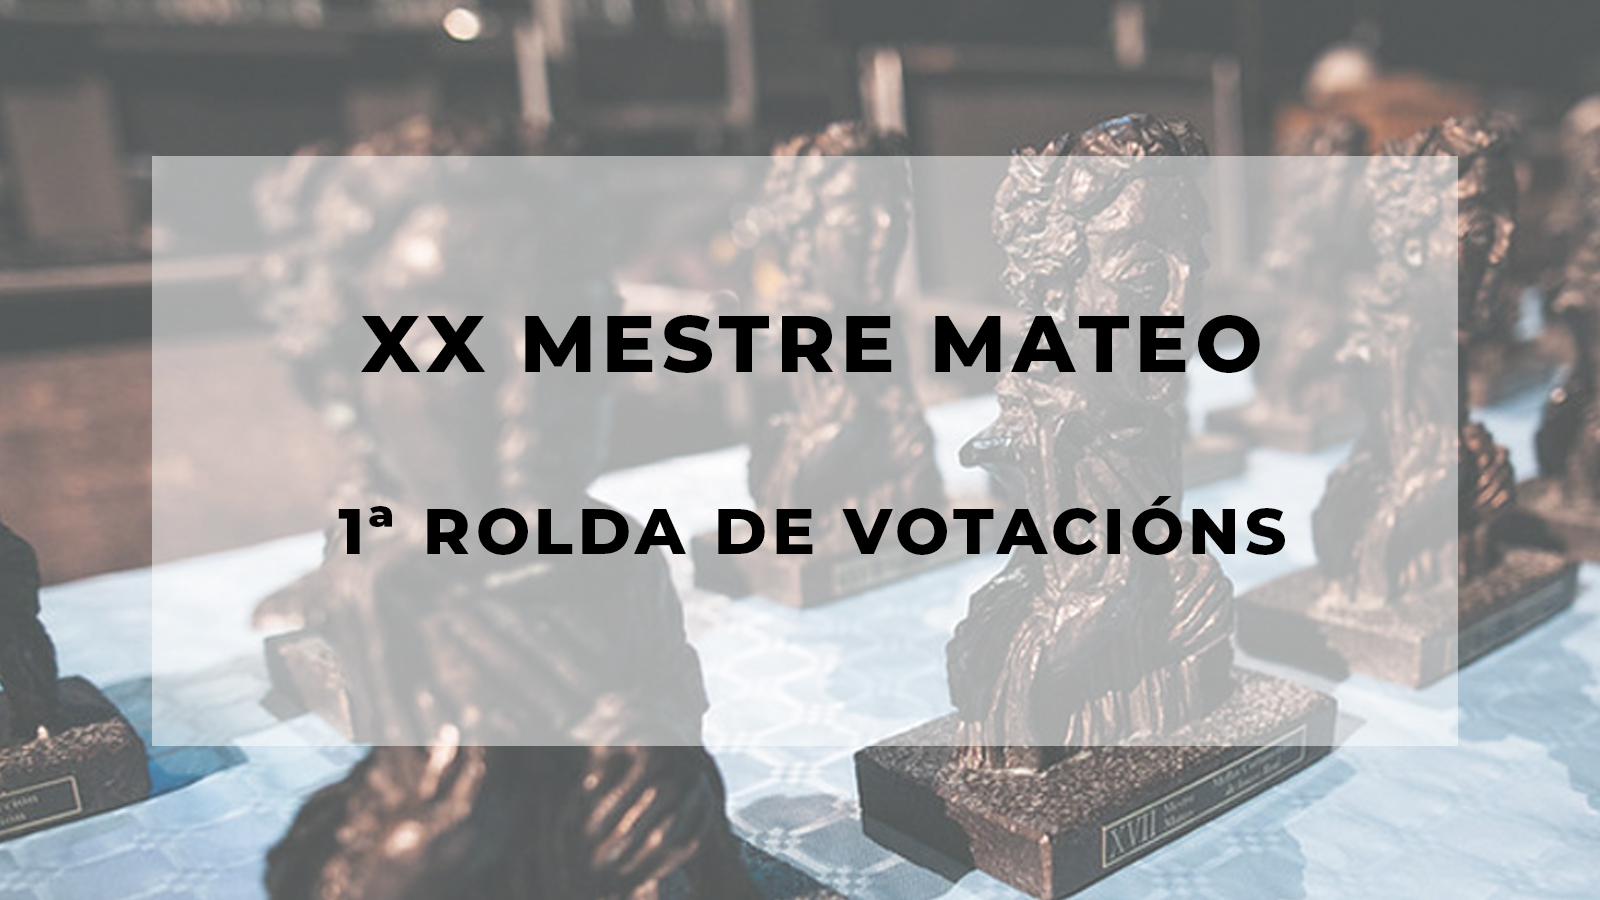 Primera ronda de votaciones de los XX Mestre Mateo